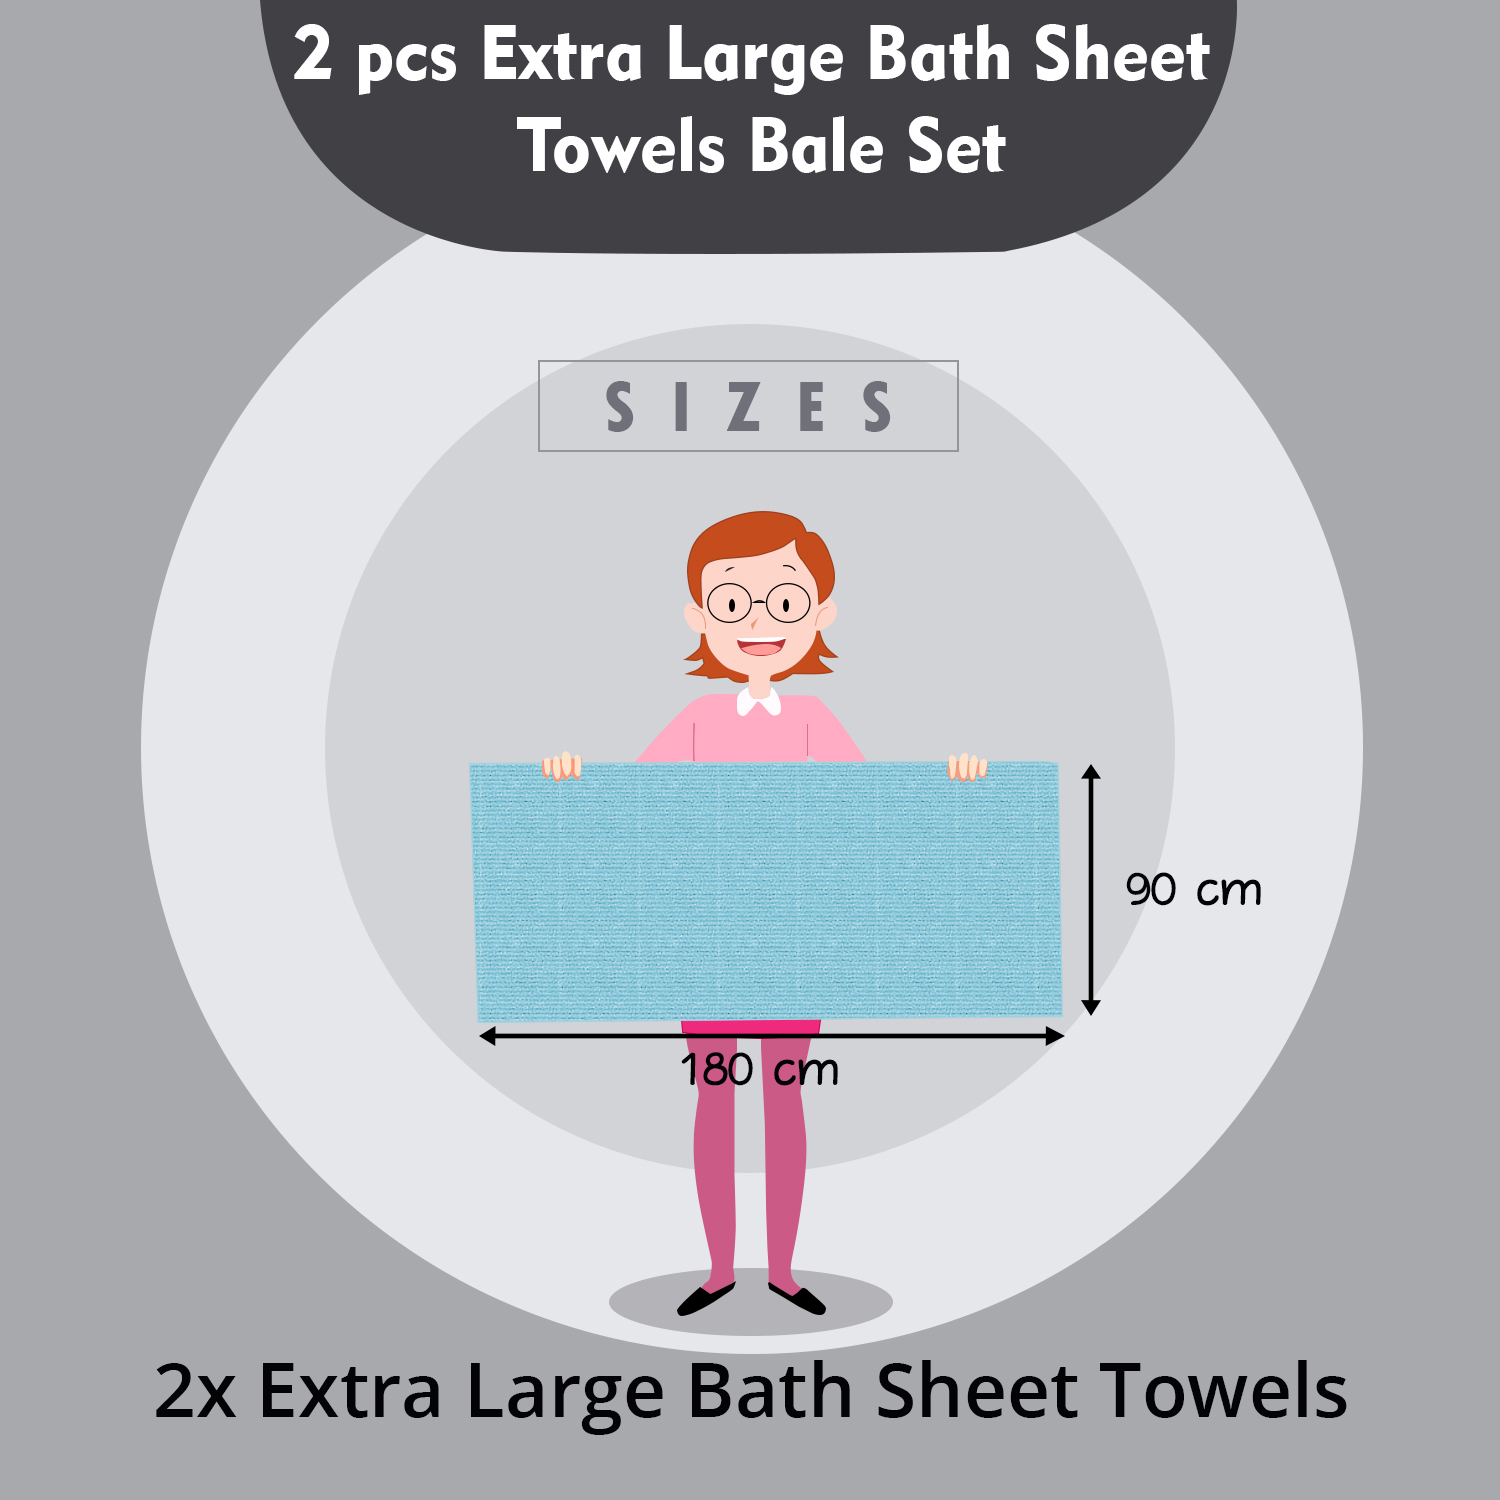 Bale Set 2pcs Olive Plain Extra Large Bath Sheet Towel